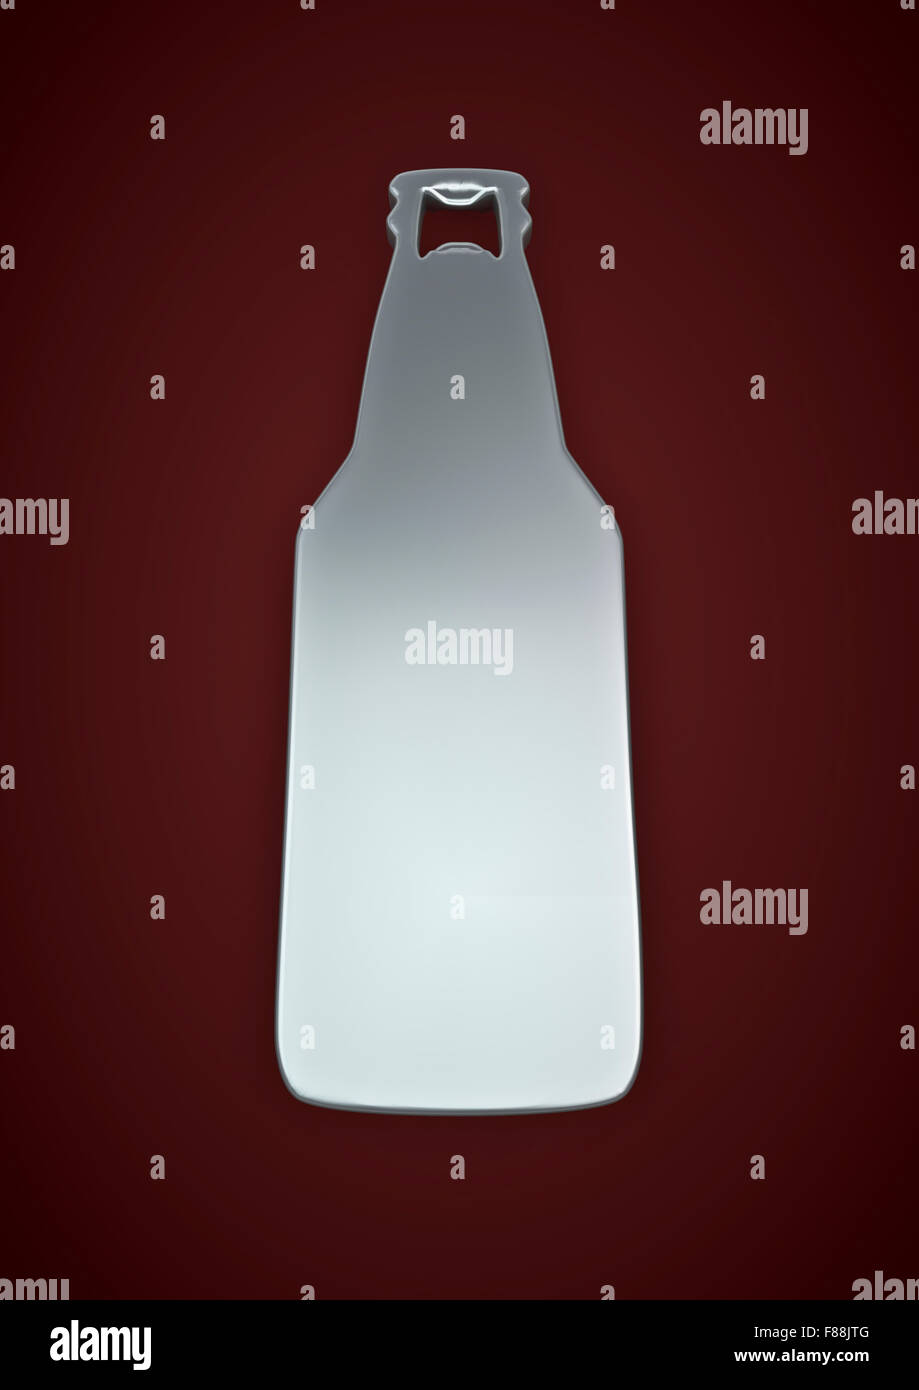 Beer bottle bottle opener / 3D render of beer bottle shaped bottle opener Stock Photo